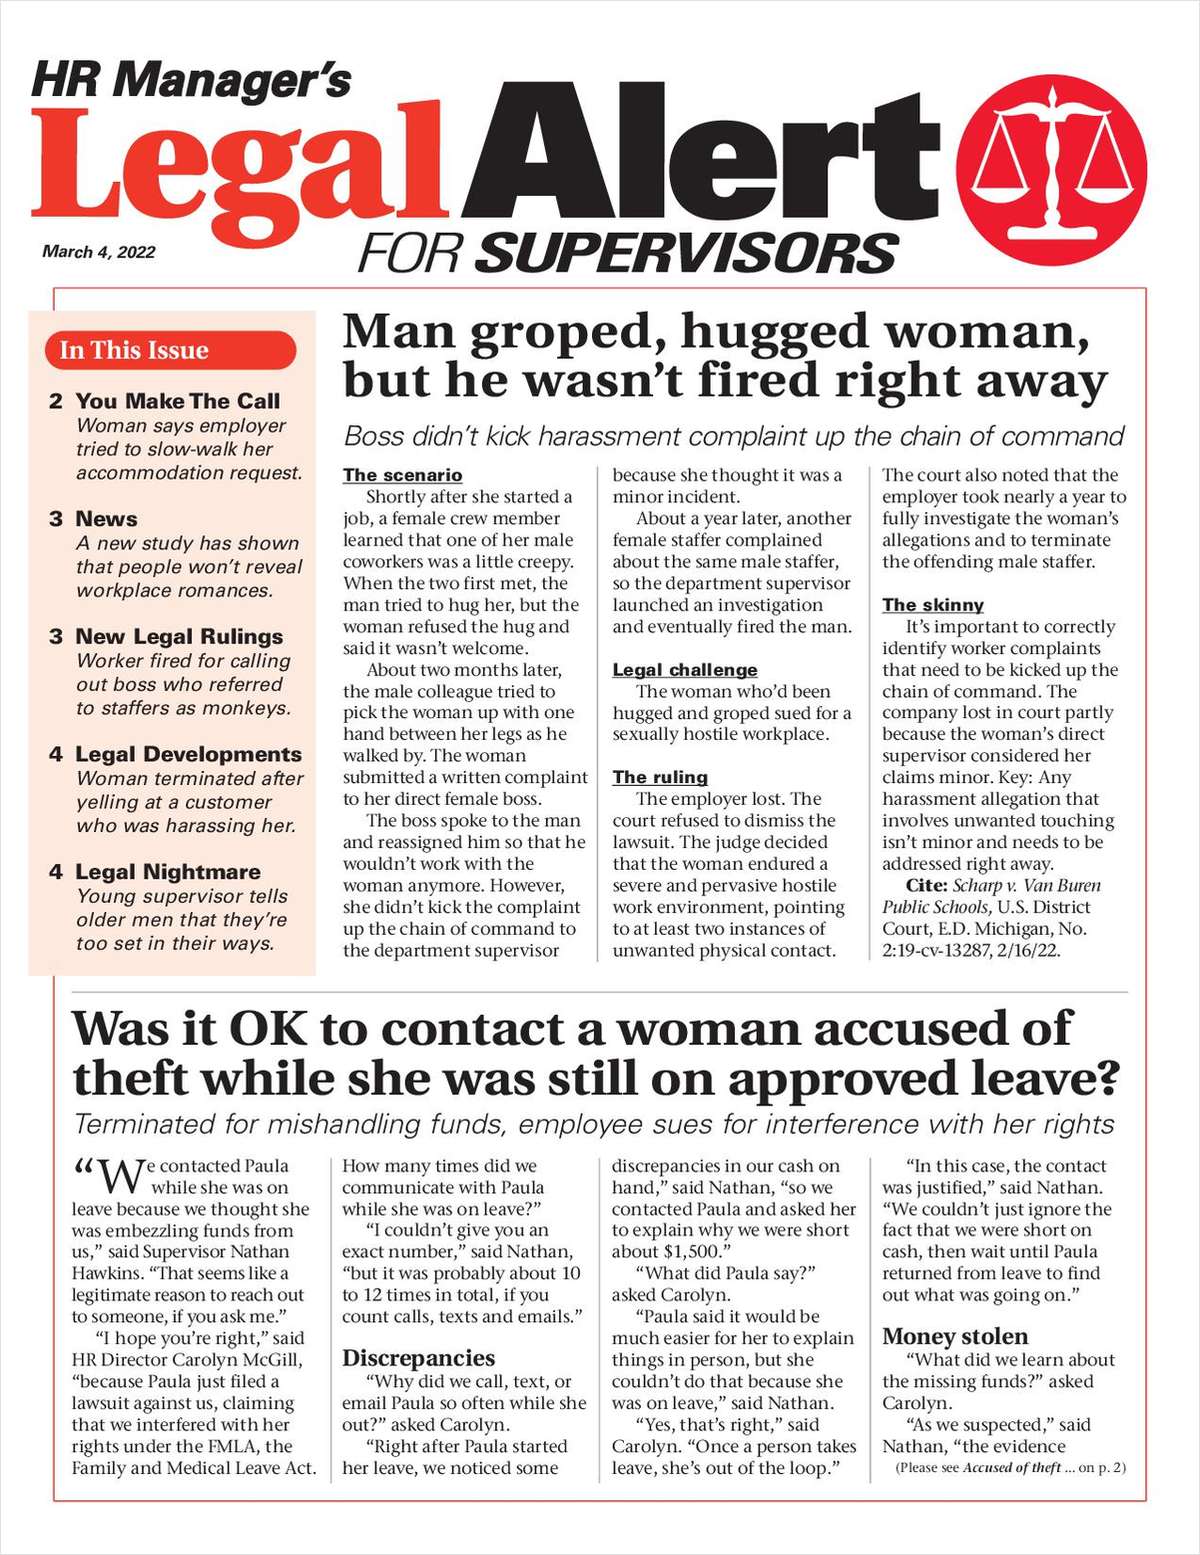 HR Manager's Legal Alert for Supervisors Newsletter: March 4 Edition